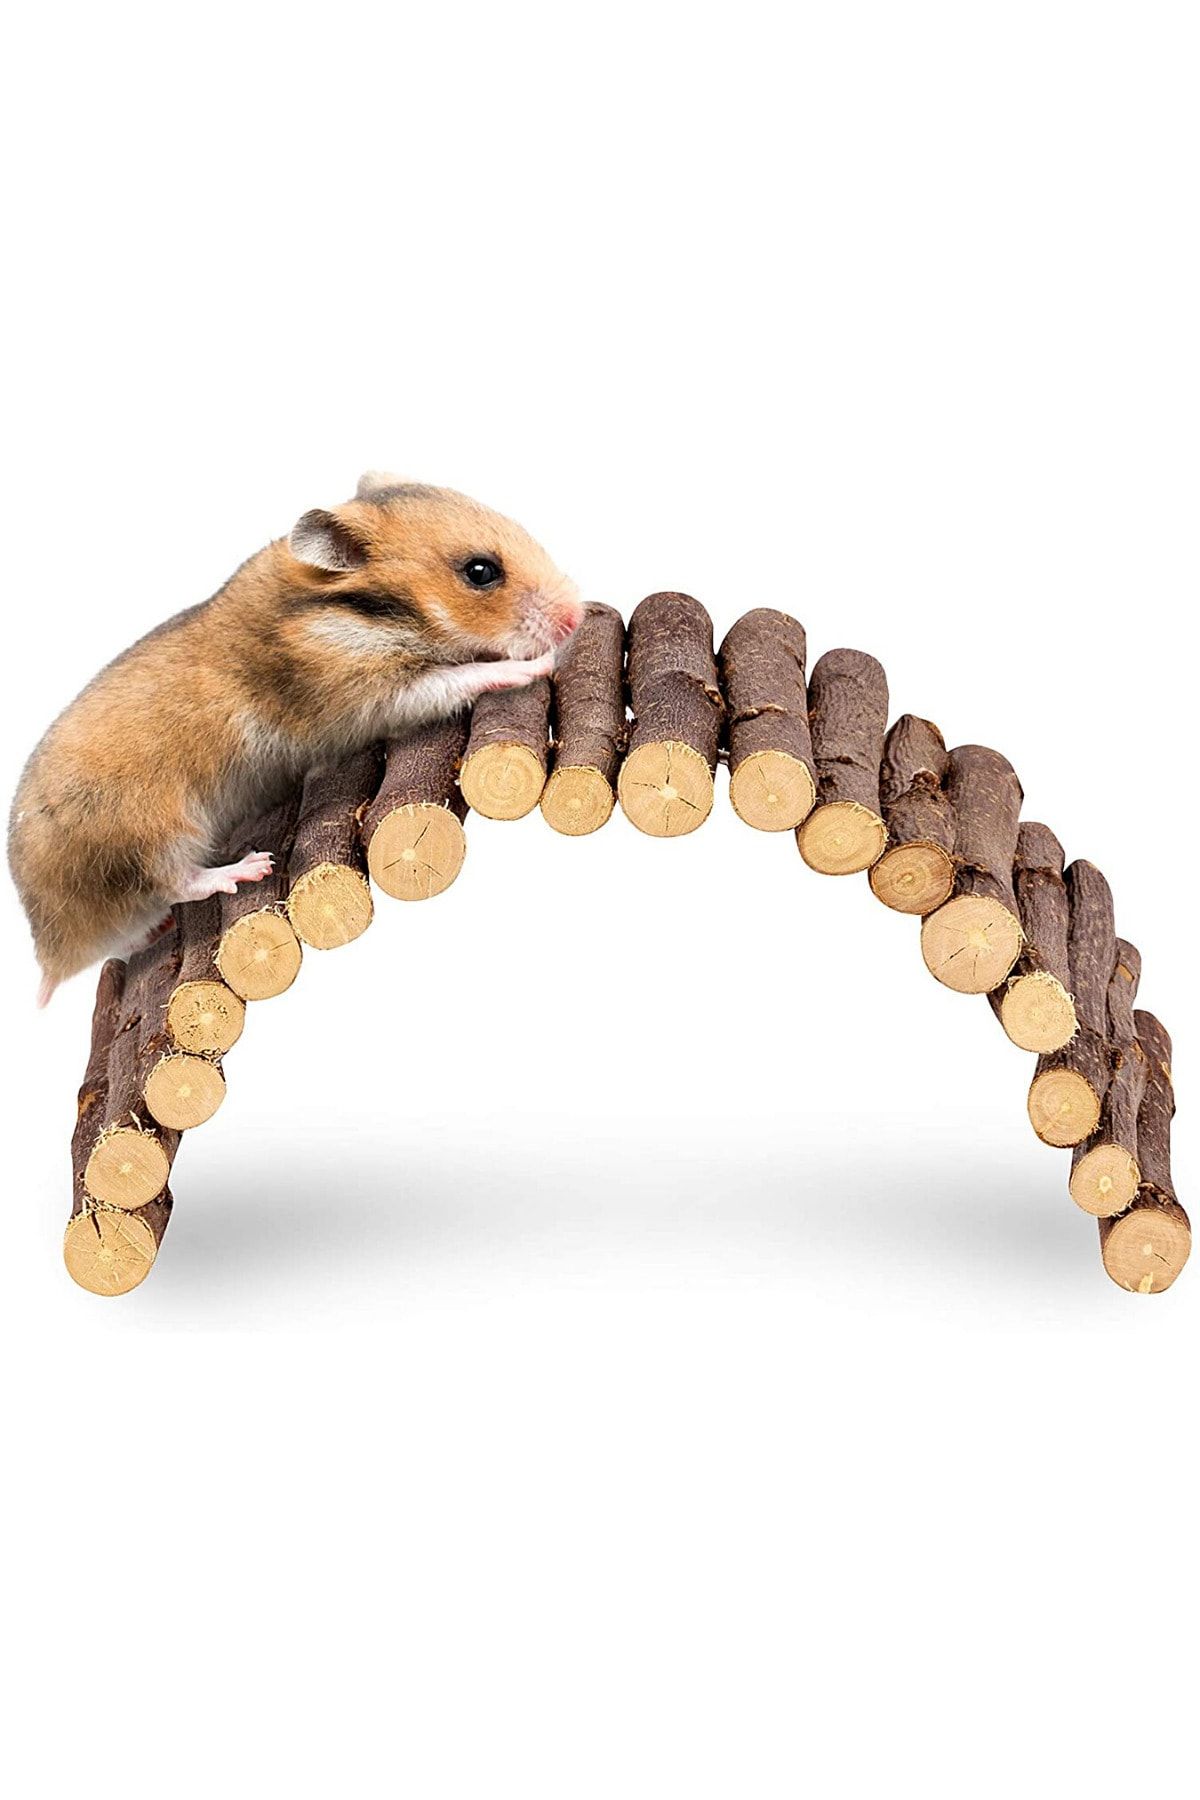 Alyones Ahşap Çubuklu Hamsterlar Için Ahşap Eğlence Köprüsü